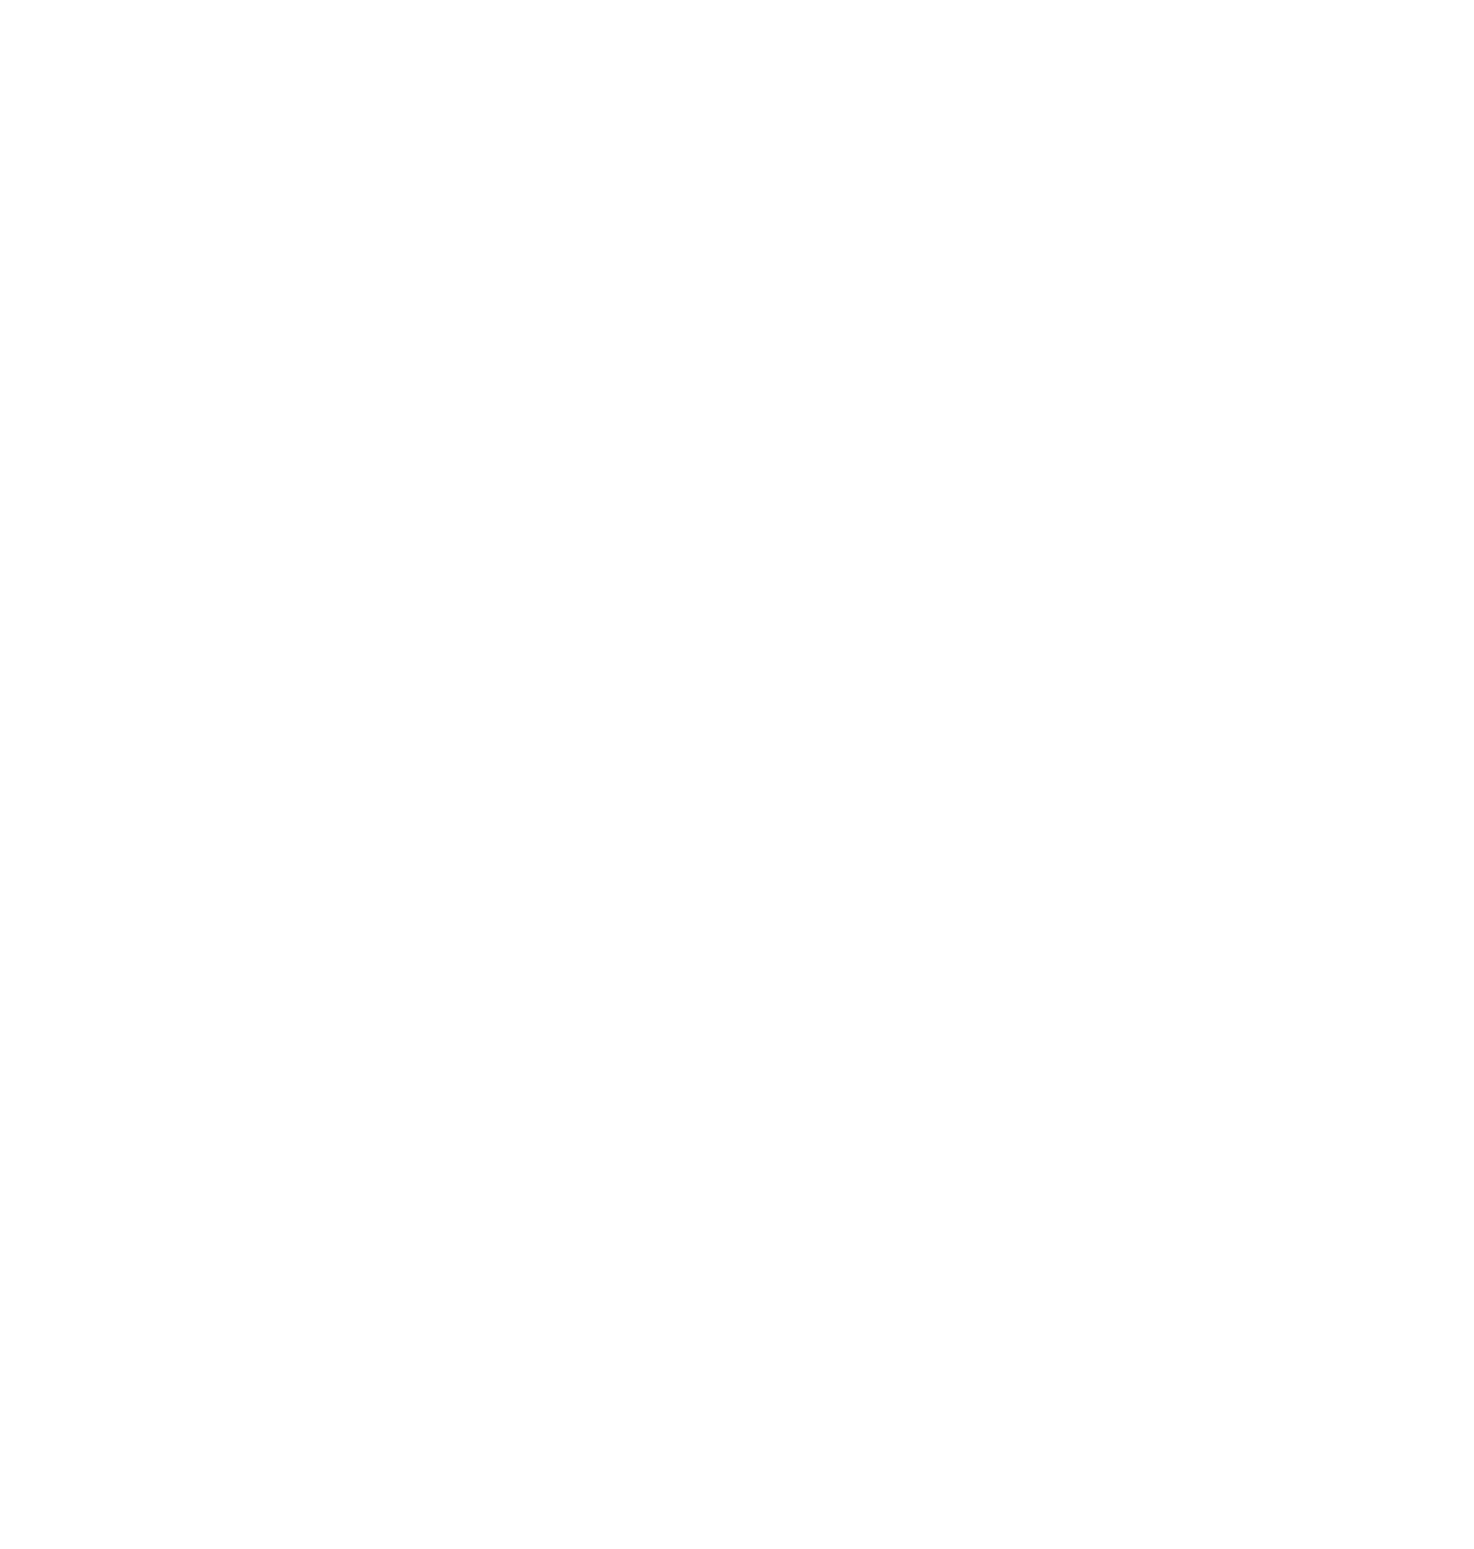 ImmunityBio logo for dark backgrounds (transparent PNG)